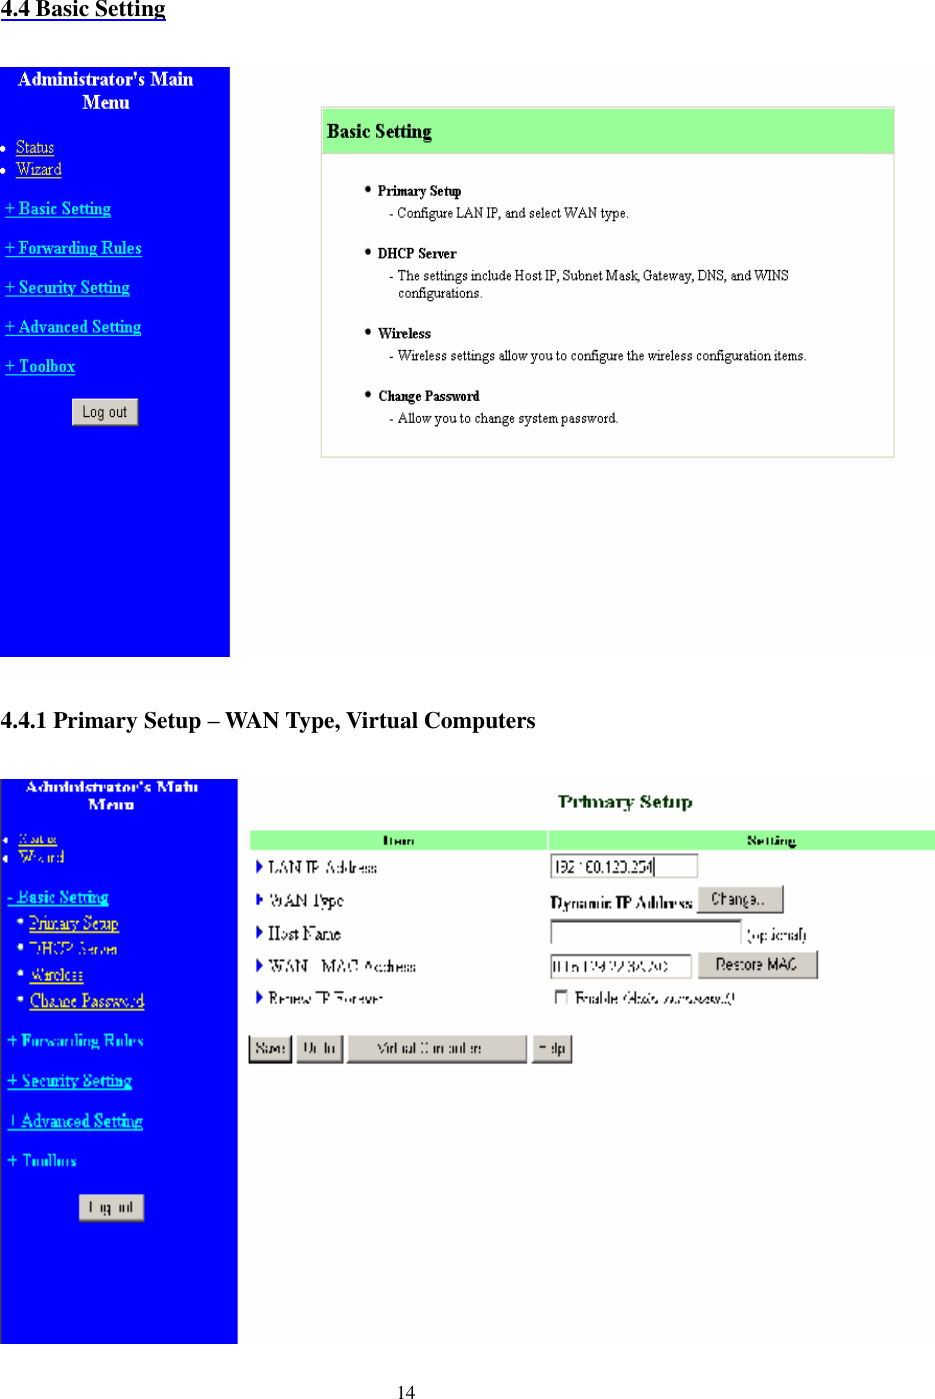  14 4.4 Basic Setting    4.4.1 Primary Setup – WAN Type, Virtual Computers  